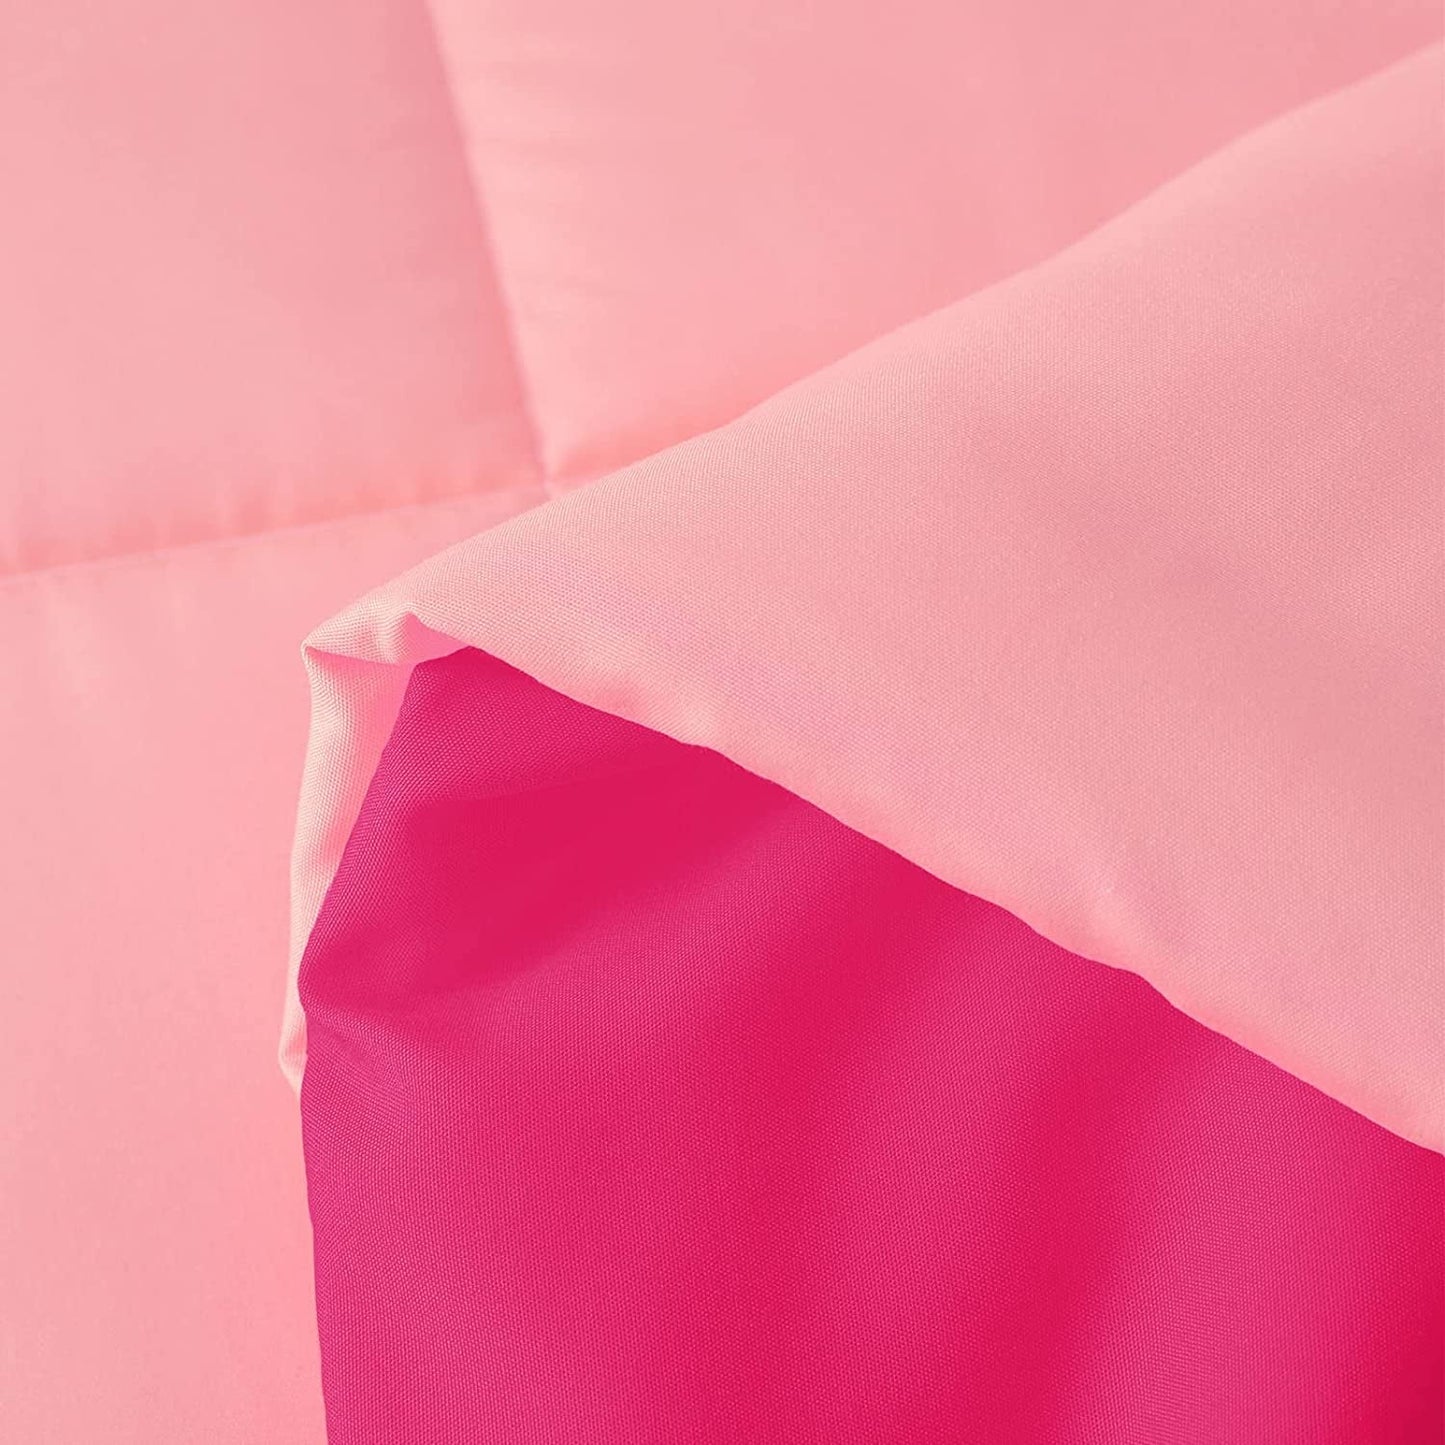 Exclusivo Mezcla Lightweight Reversible 3-Piece Comforter Set All Seasons, Down Alternative Comforter with 2 Pillow Shams, King Size, Hot Pink/ Blush Pink